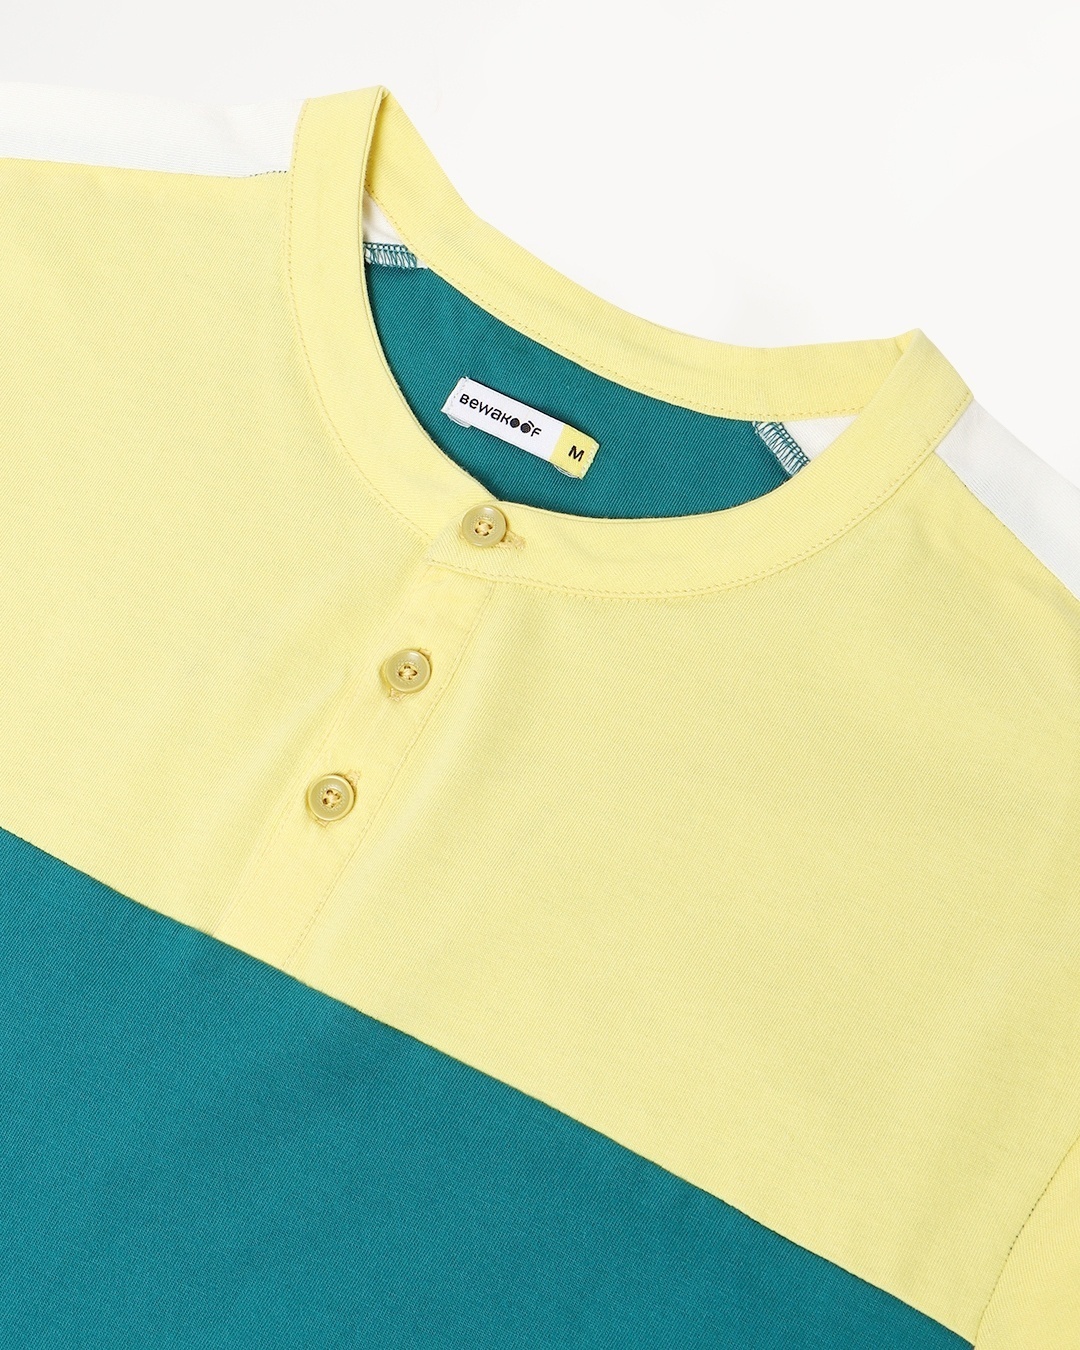 Shop Men's Yellow and Blue Color Block Henley T-shirt